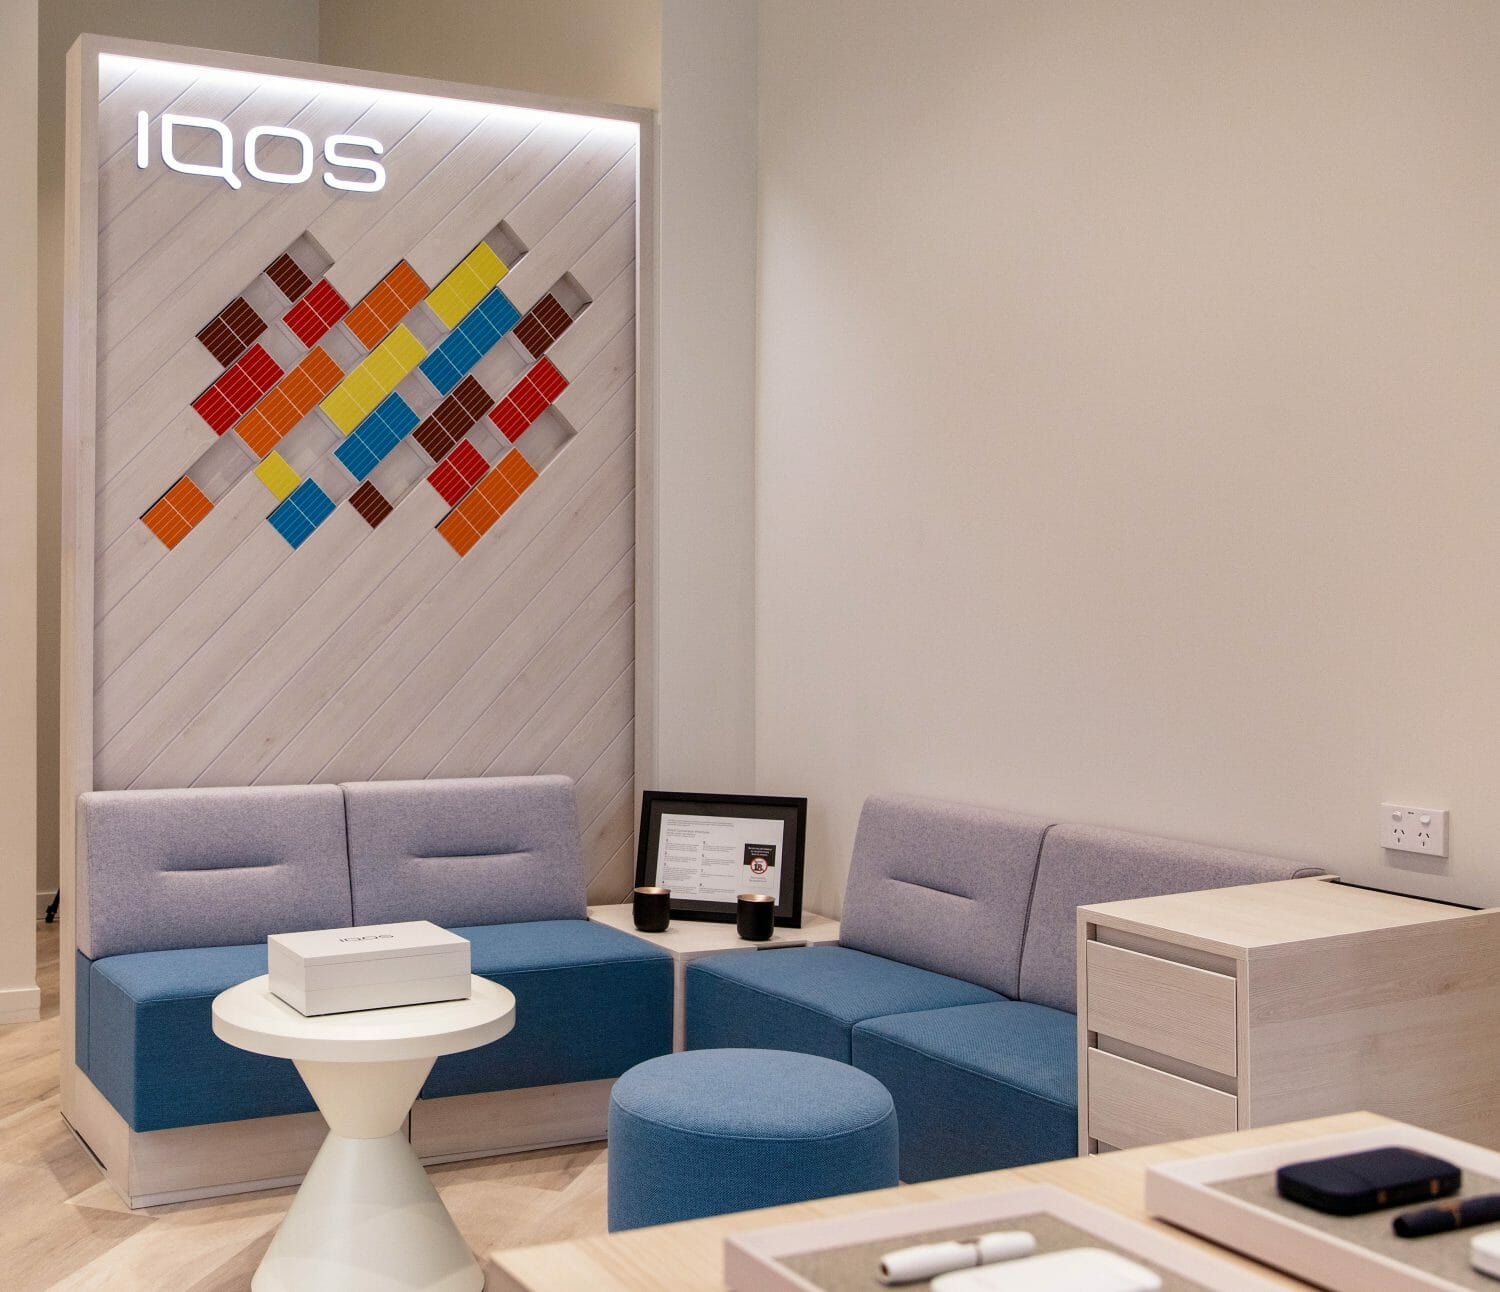 Modern and Minimalistic Interior Design for IQOS